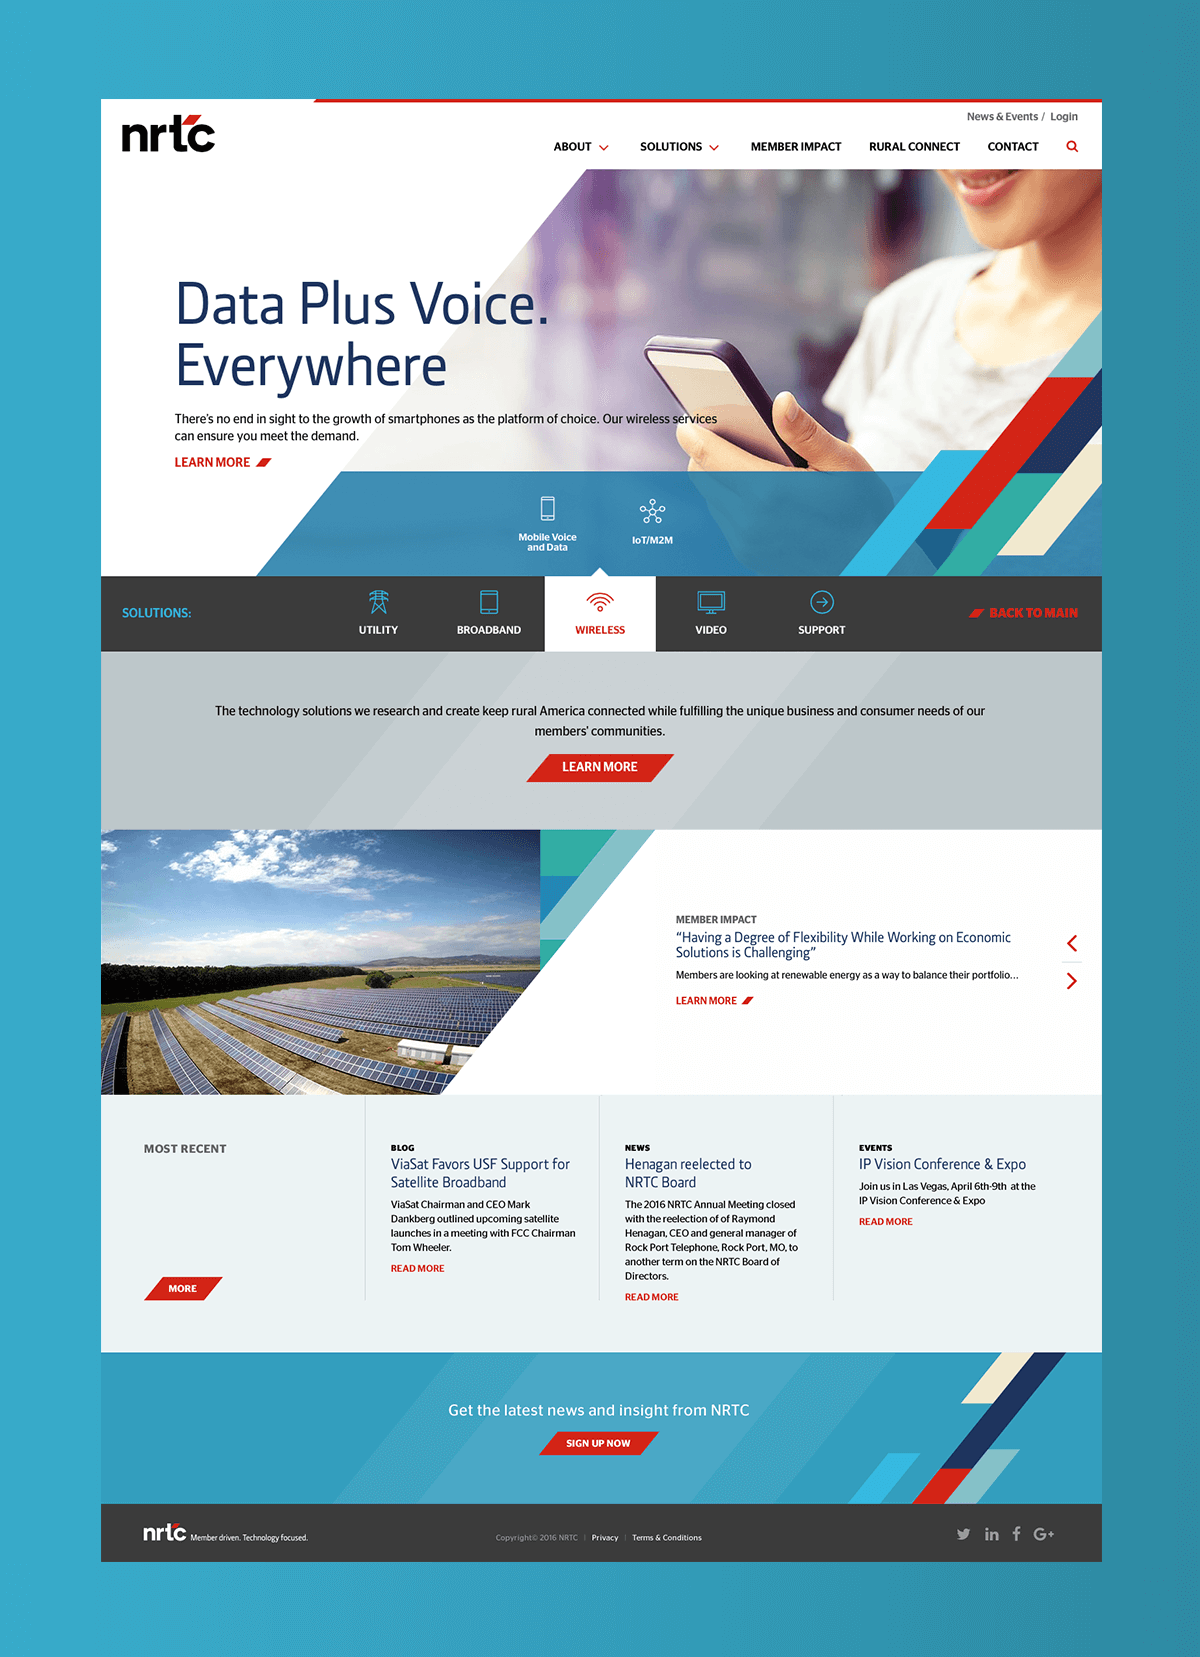 New brand identity for NRTC showcased in the digital design of the website.